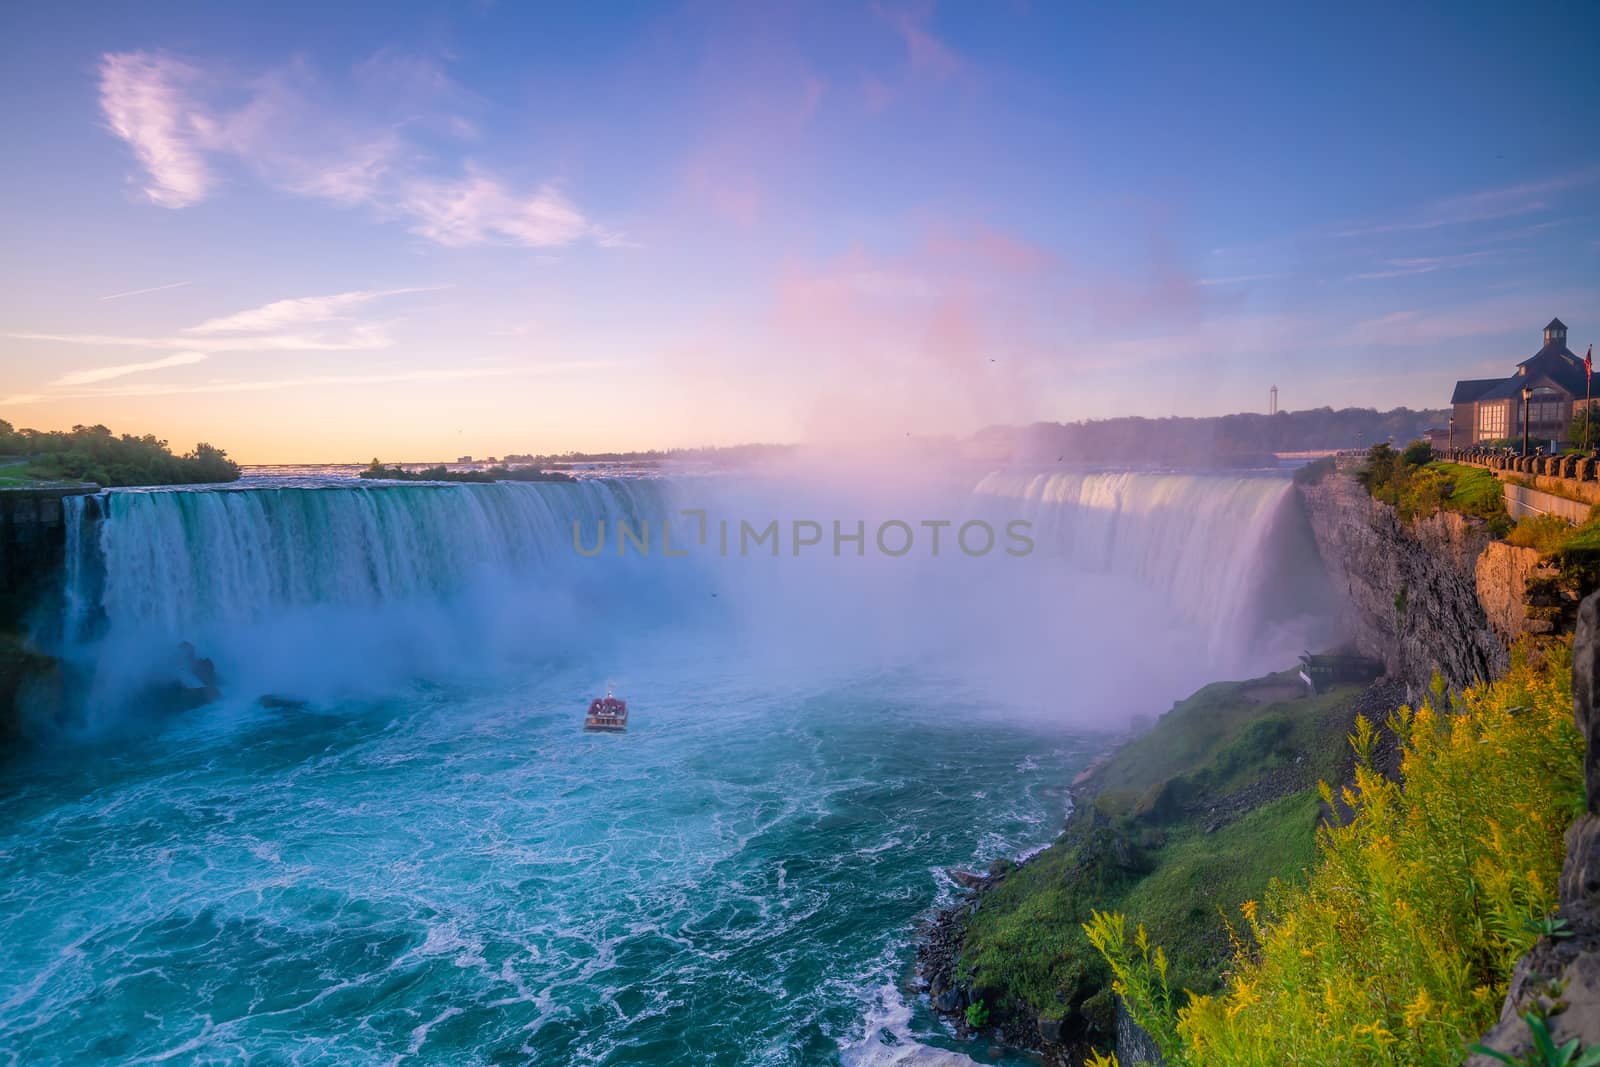 Niagara Falls view from Ontario, Canada by f11photo